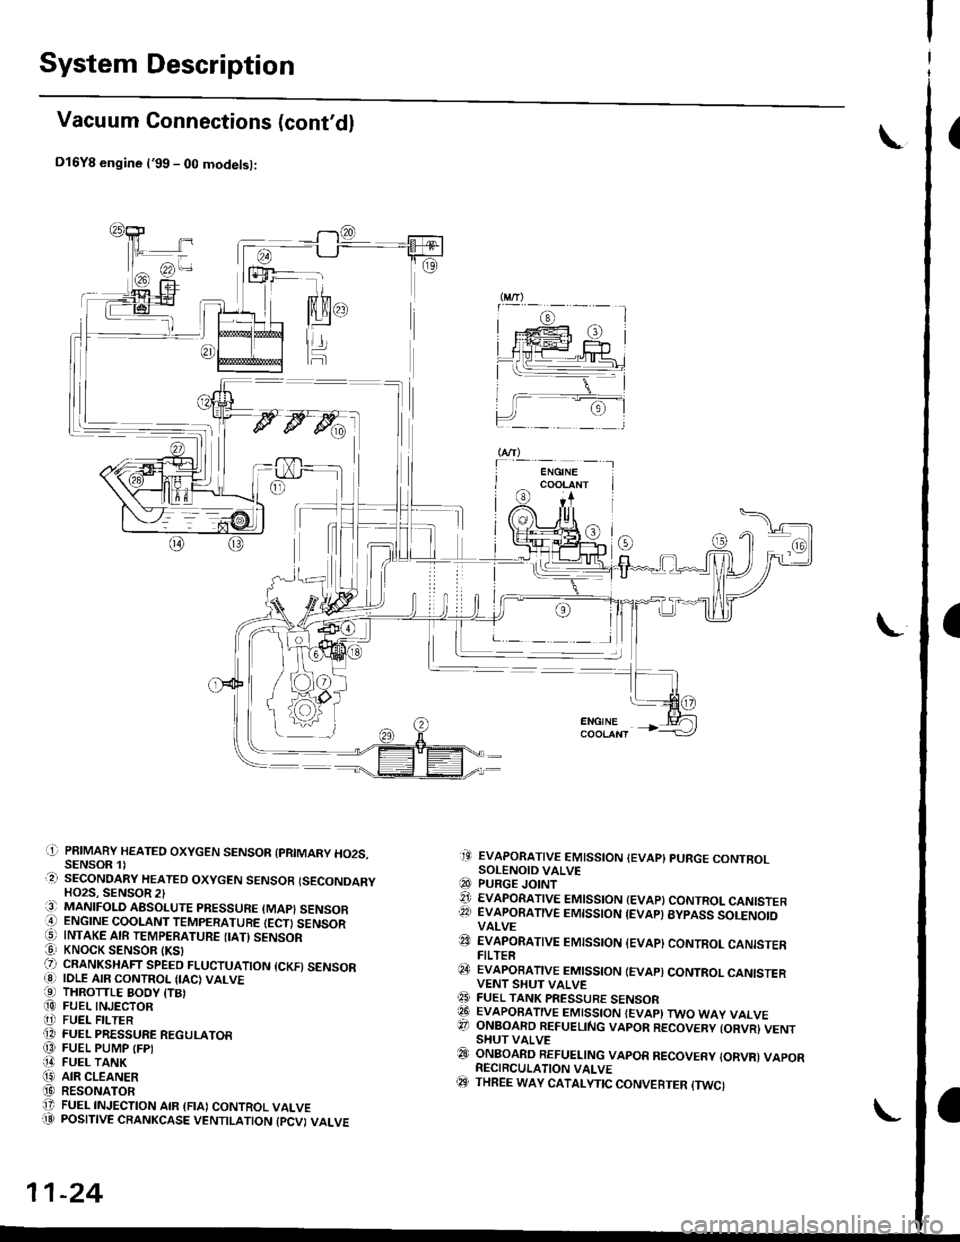 HONDA CIVIC 1999 6.G User Guide System Description
Vacuum Connections (contdl
D16Y8 engine l99 - 00 modetsl:
(]-i PAIMARY HEATEO OXYGEN SENSOR {PRIMARY HO2S,SENSOR 1)..2r SECONOARY HEATEO OXycEN SENSOB ISECONDARYHO2S, SENSOR 2li3)